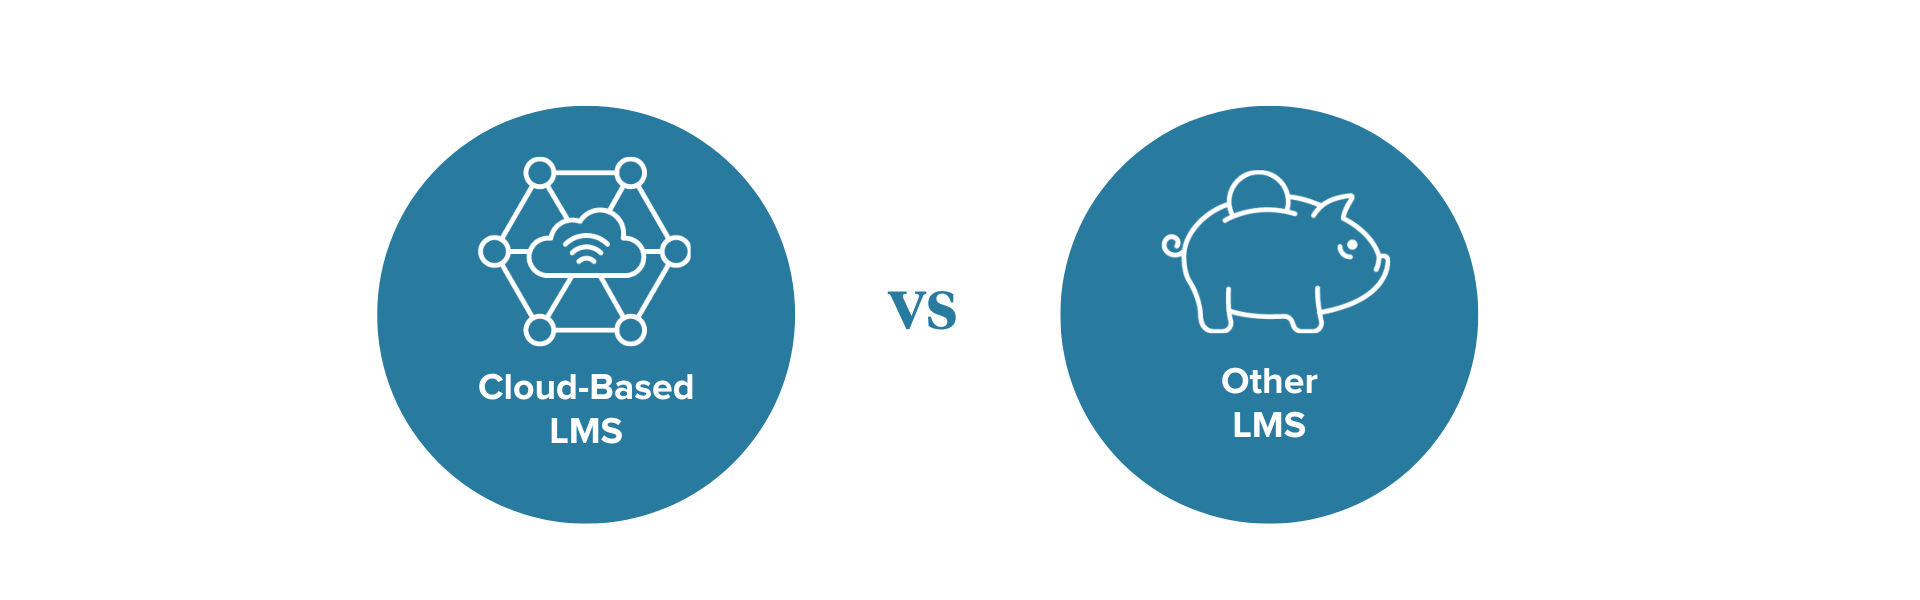 cloud-based lms vs other lms